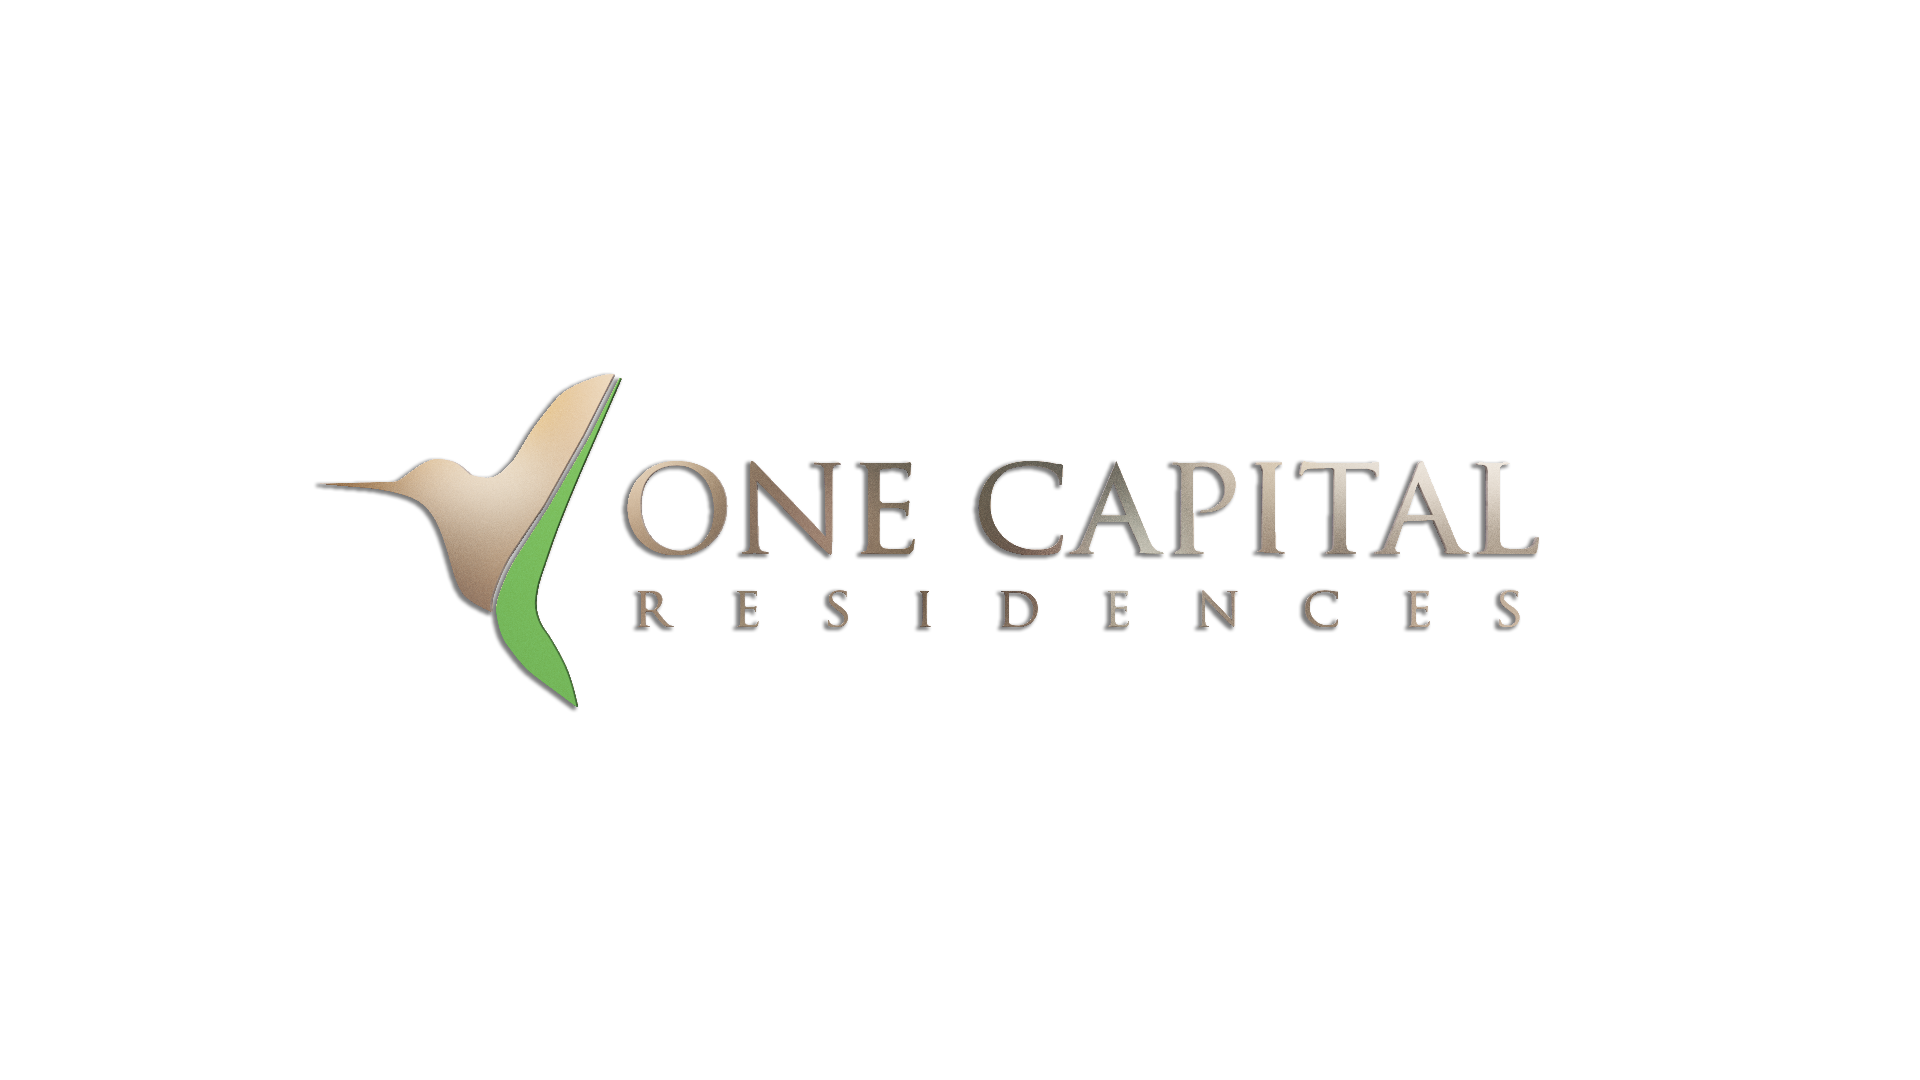 One Capital Residences